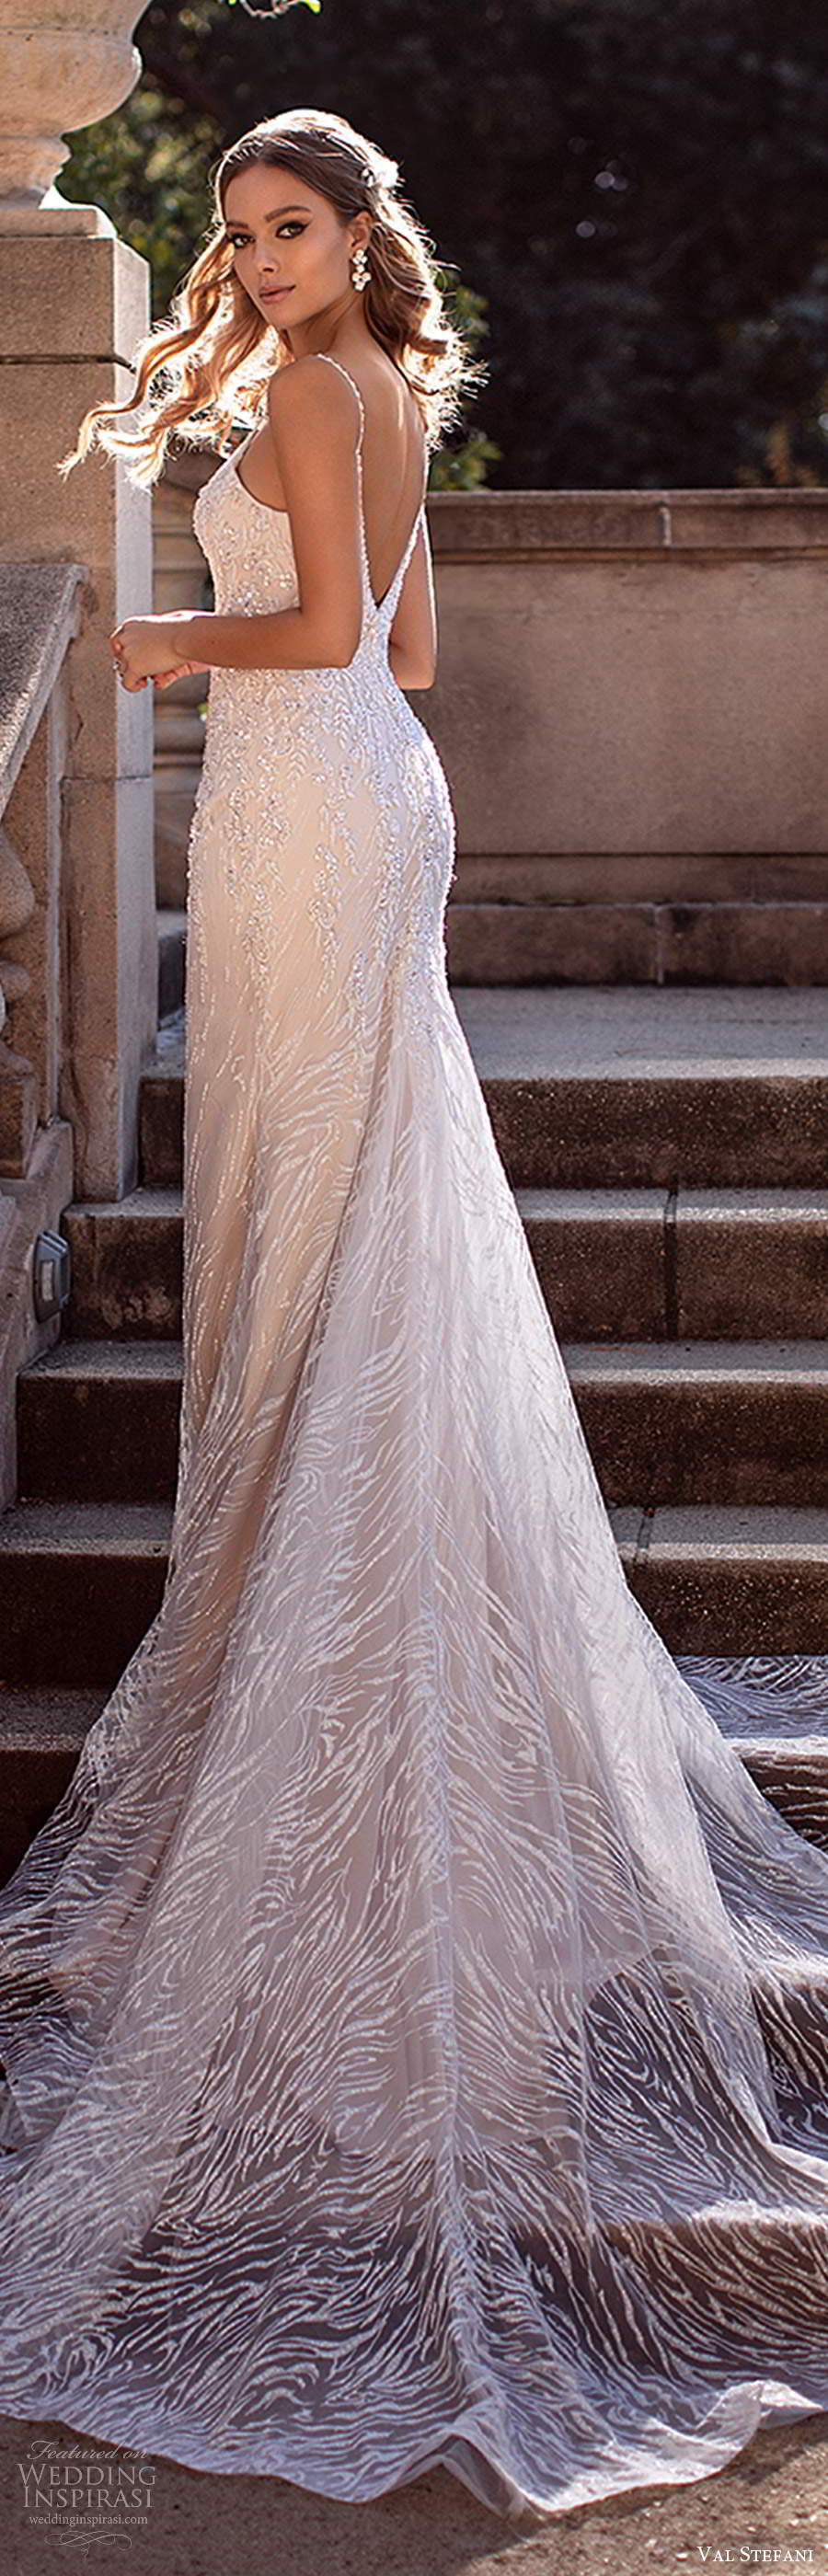 val stefani fall 2020 bridal sleeveless thin straps sweetheart neckline fully embellished sheath wedding dress chapel train (2) zbv